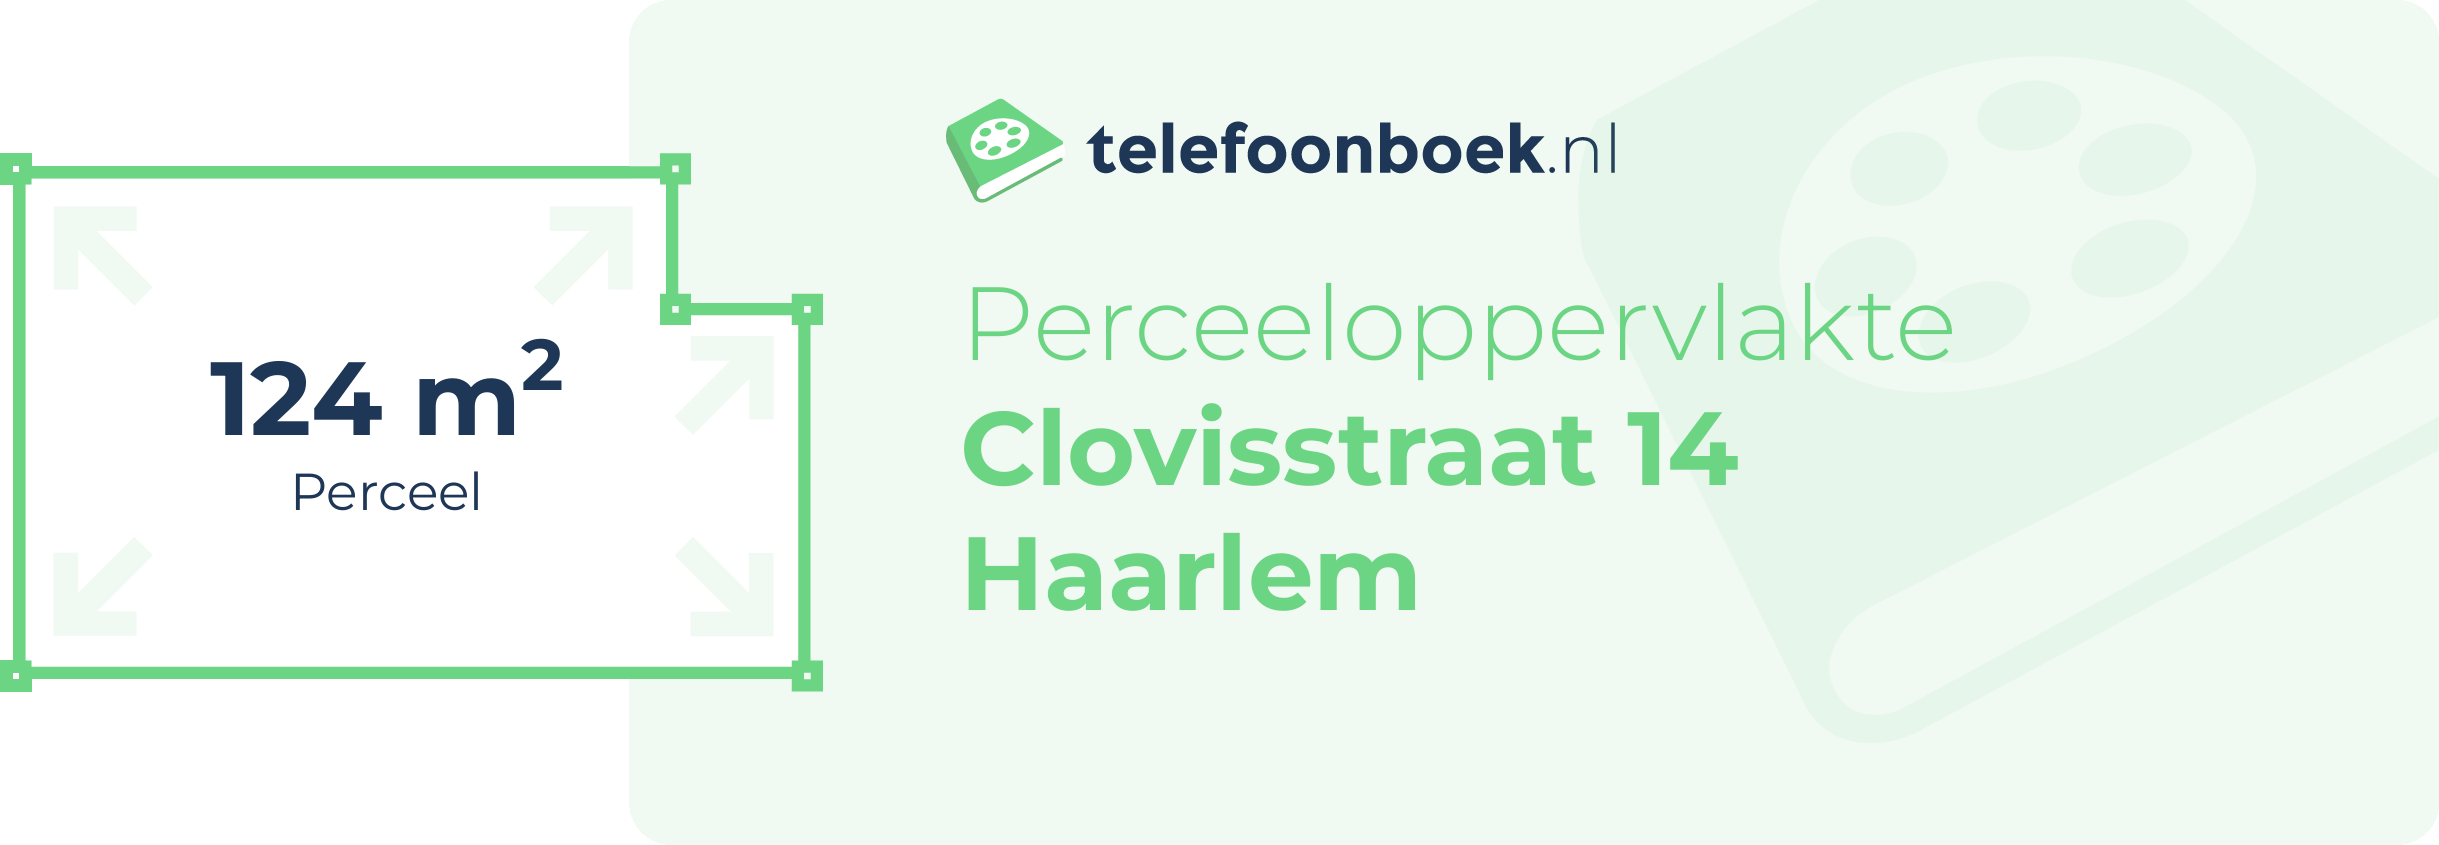 Perceeloppervlakte Clovisstraat 14 Haarlem